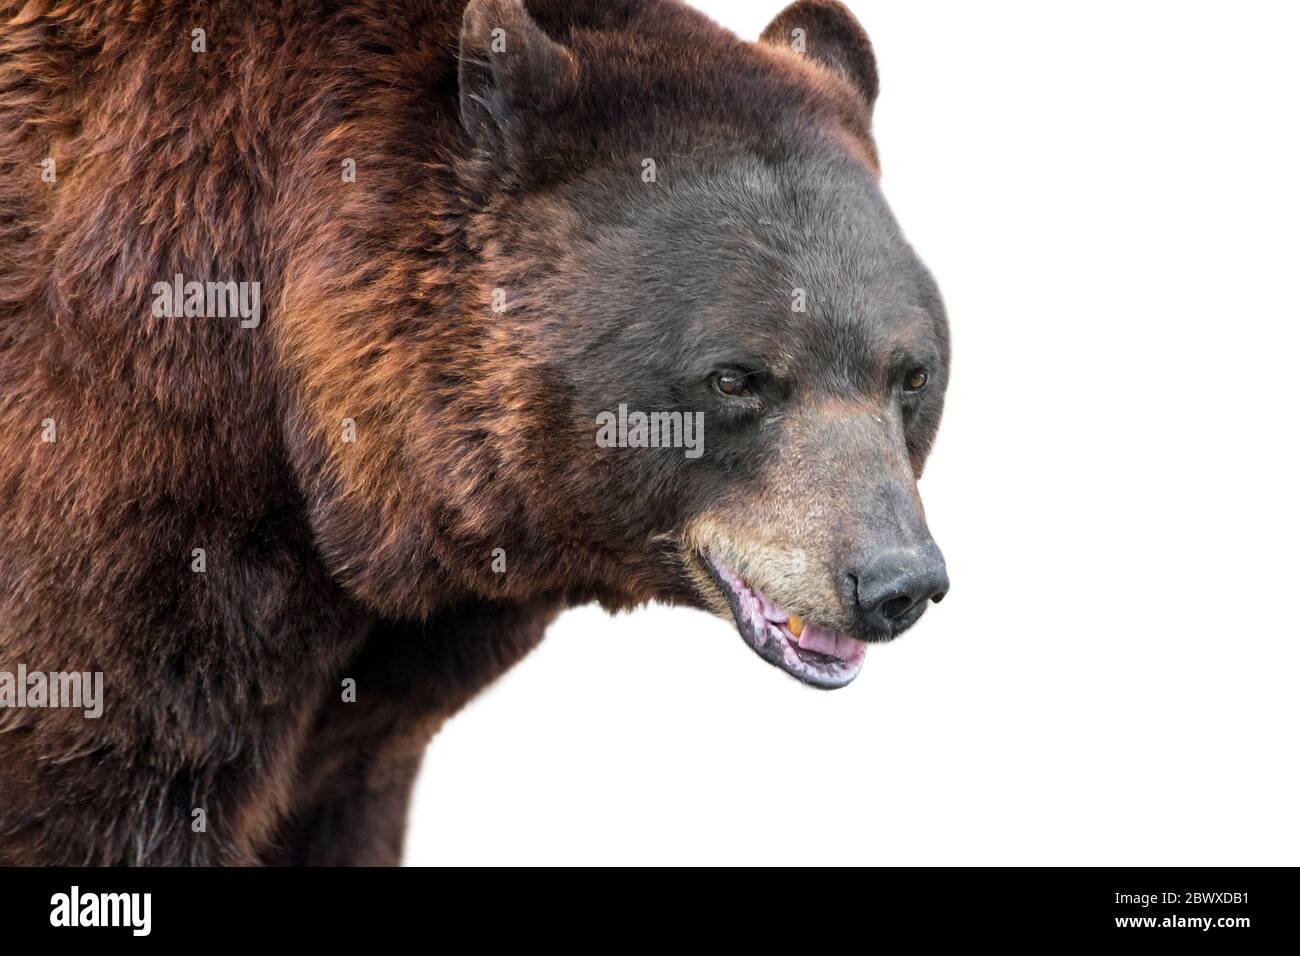 European brown bear (Ursus arctos arctos) close up portrait against white background Stock Photo